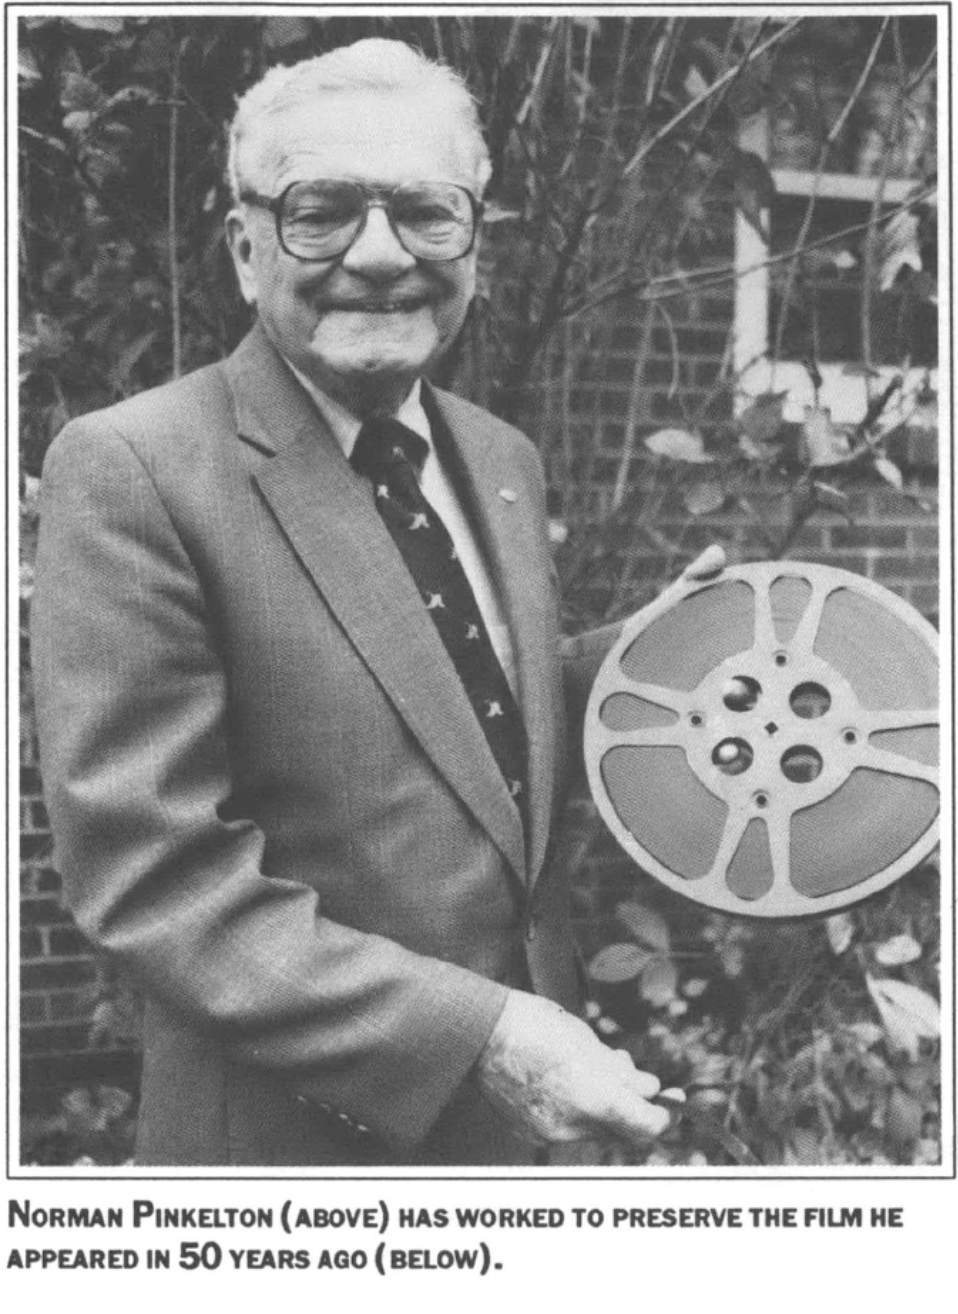 Norman Pinkelton holding a film reel